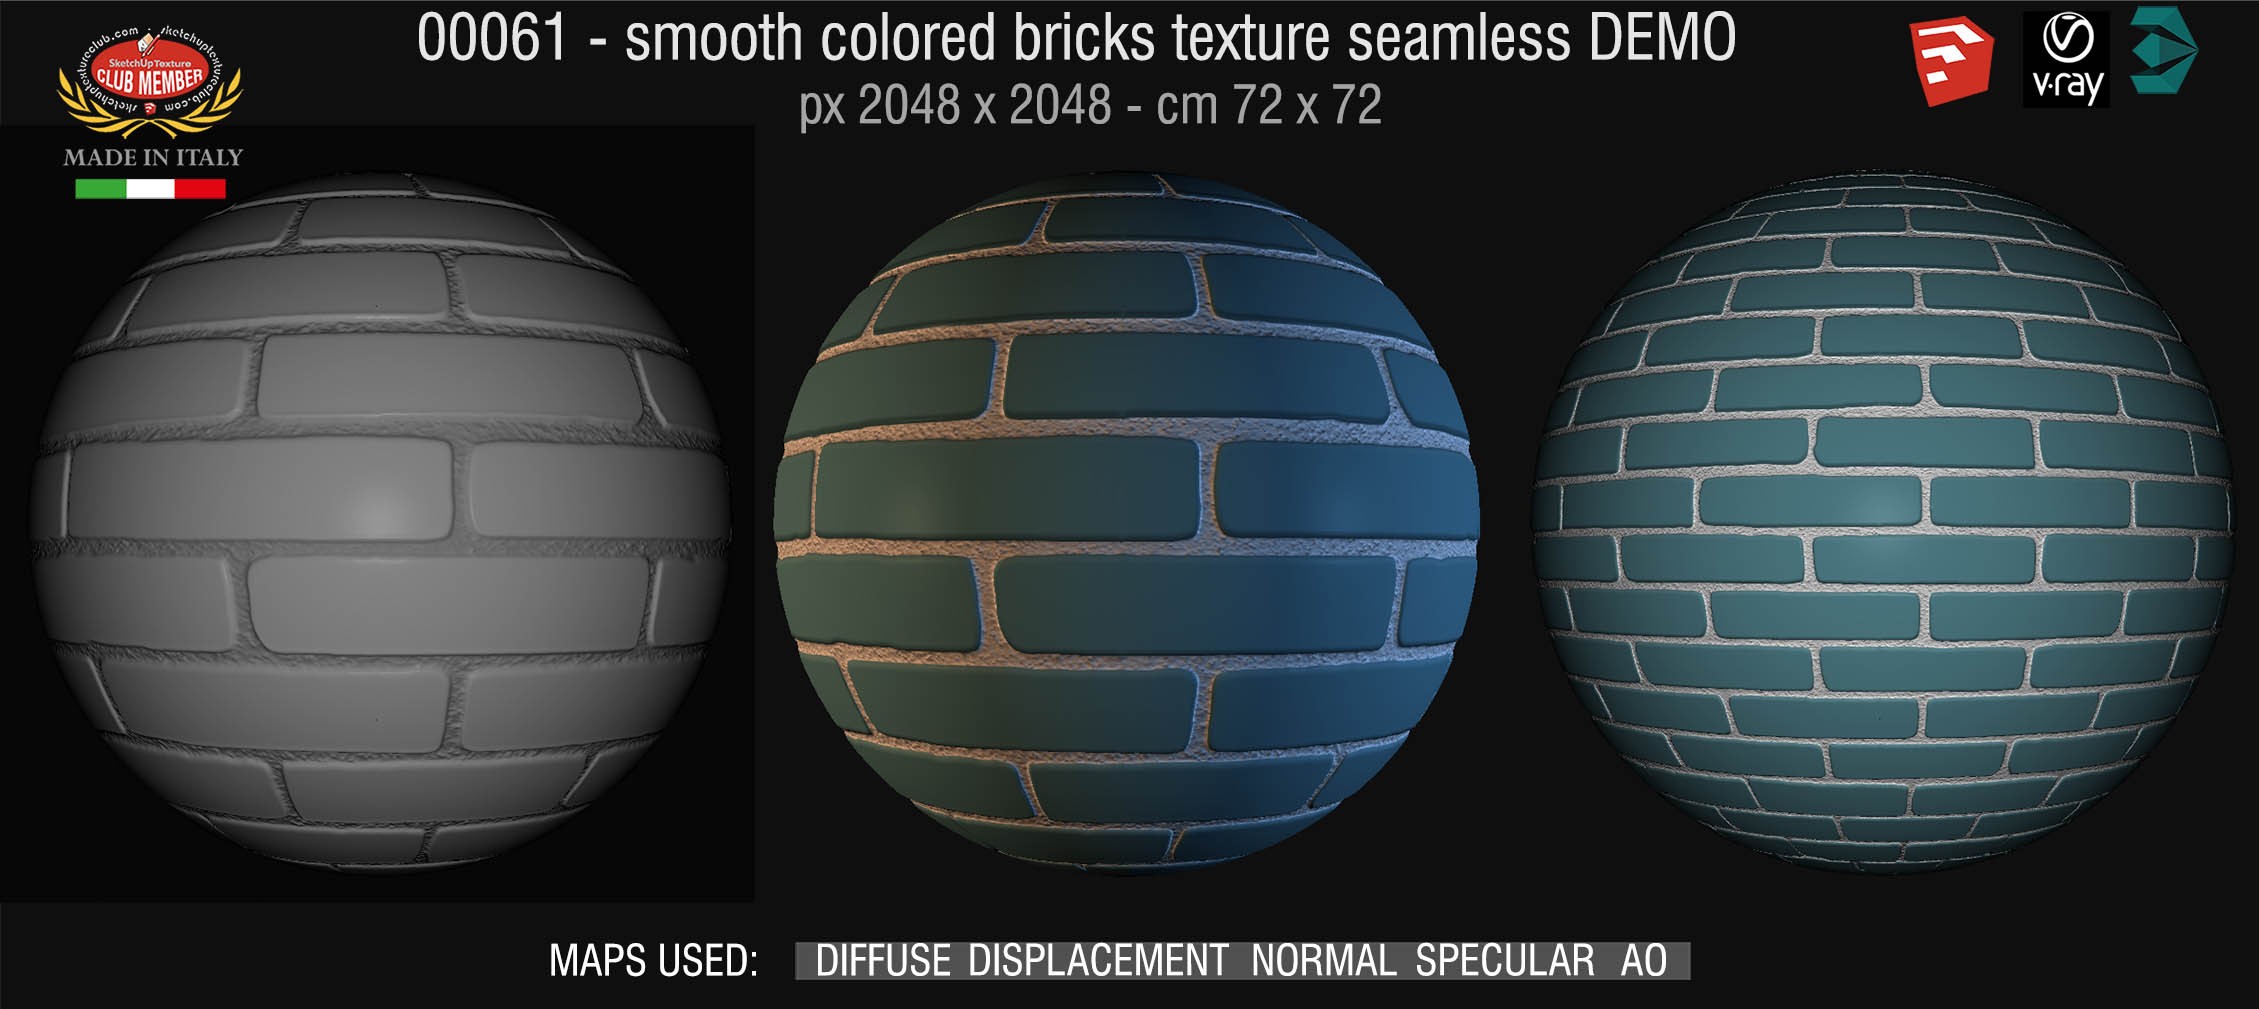 00061 smooth colored bricks texture seamless + maps DEMO